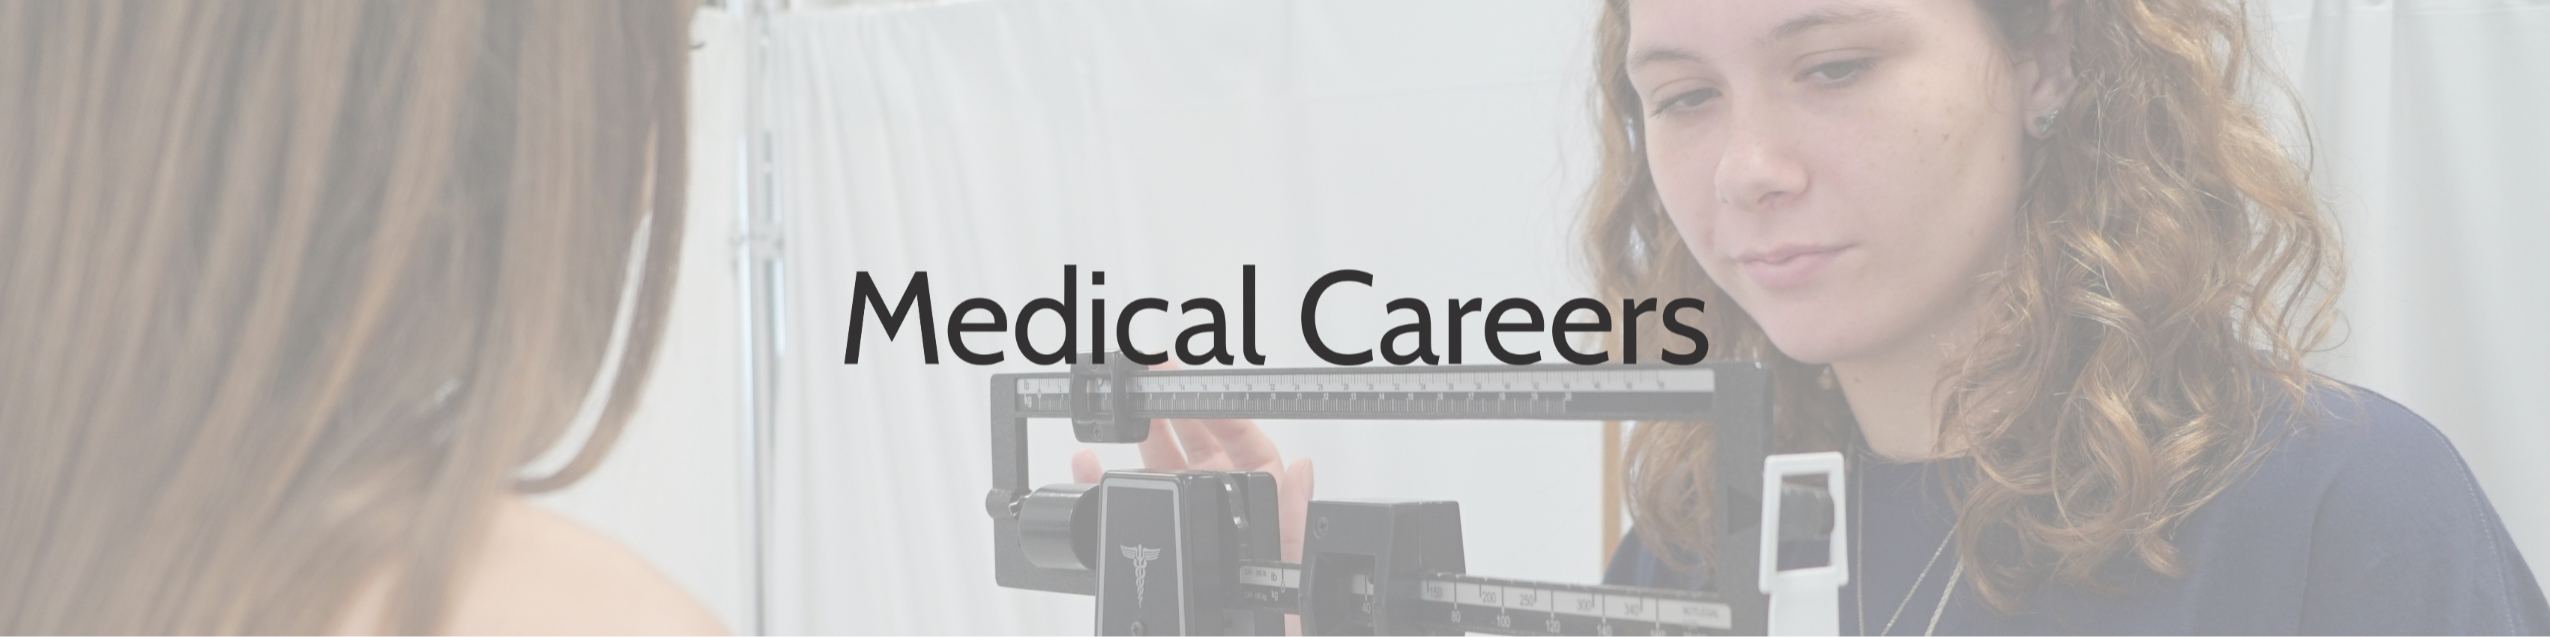 Medical Careers